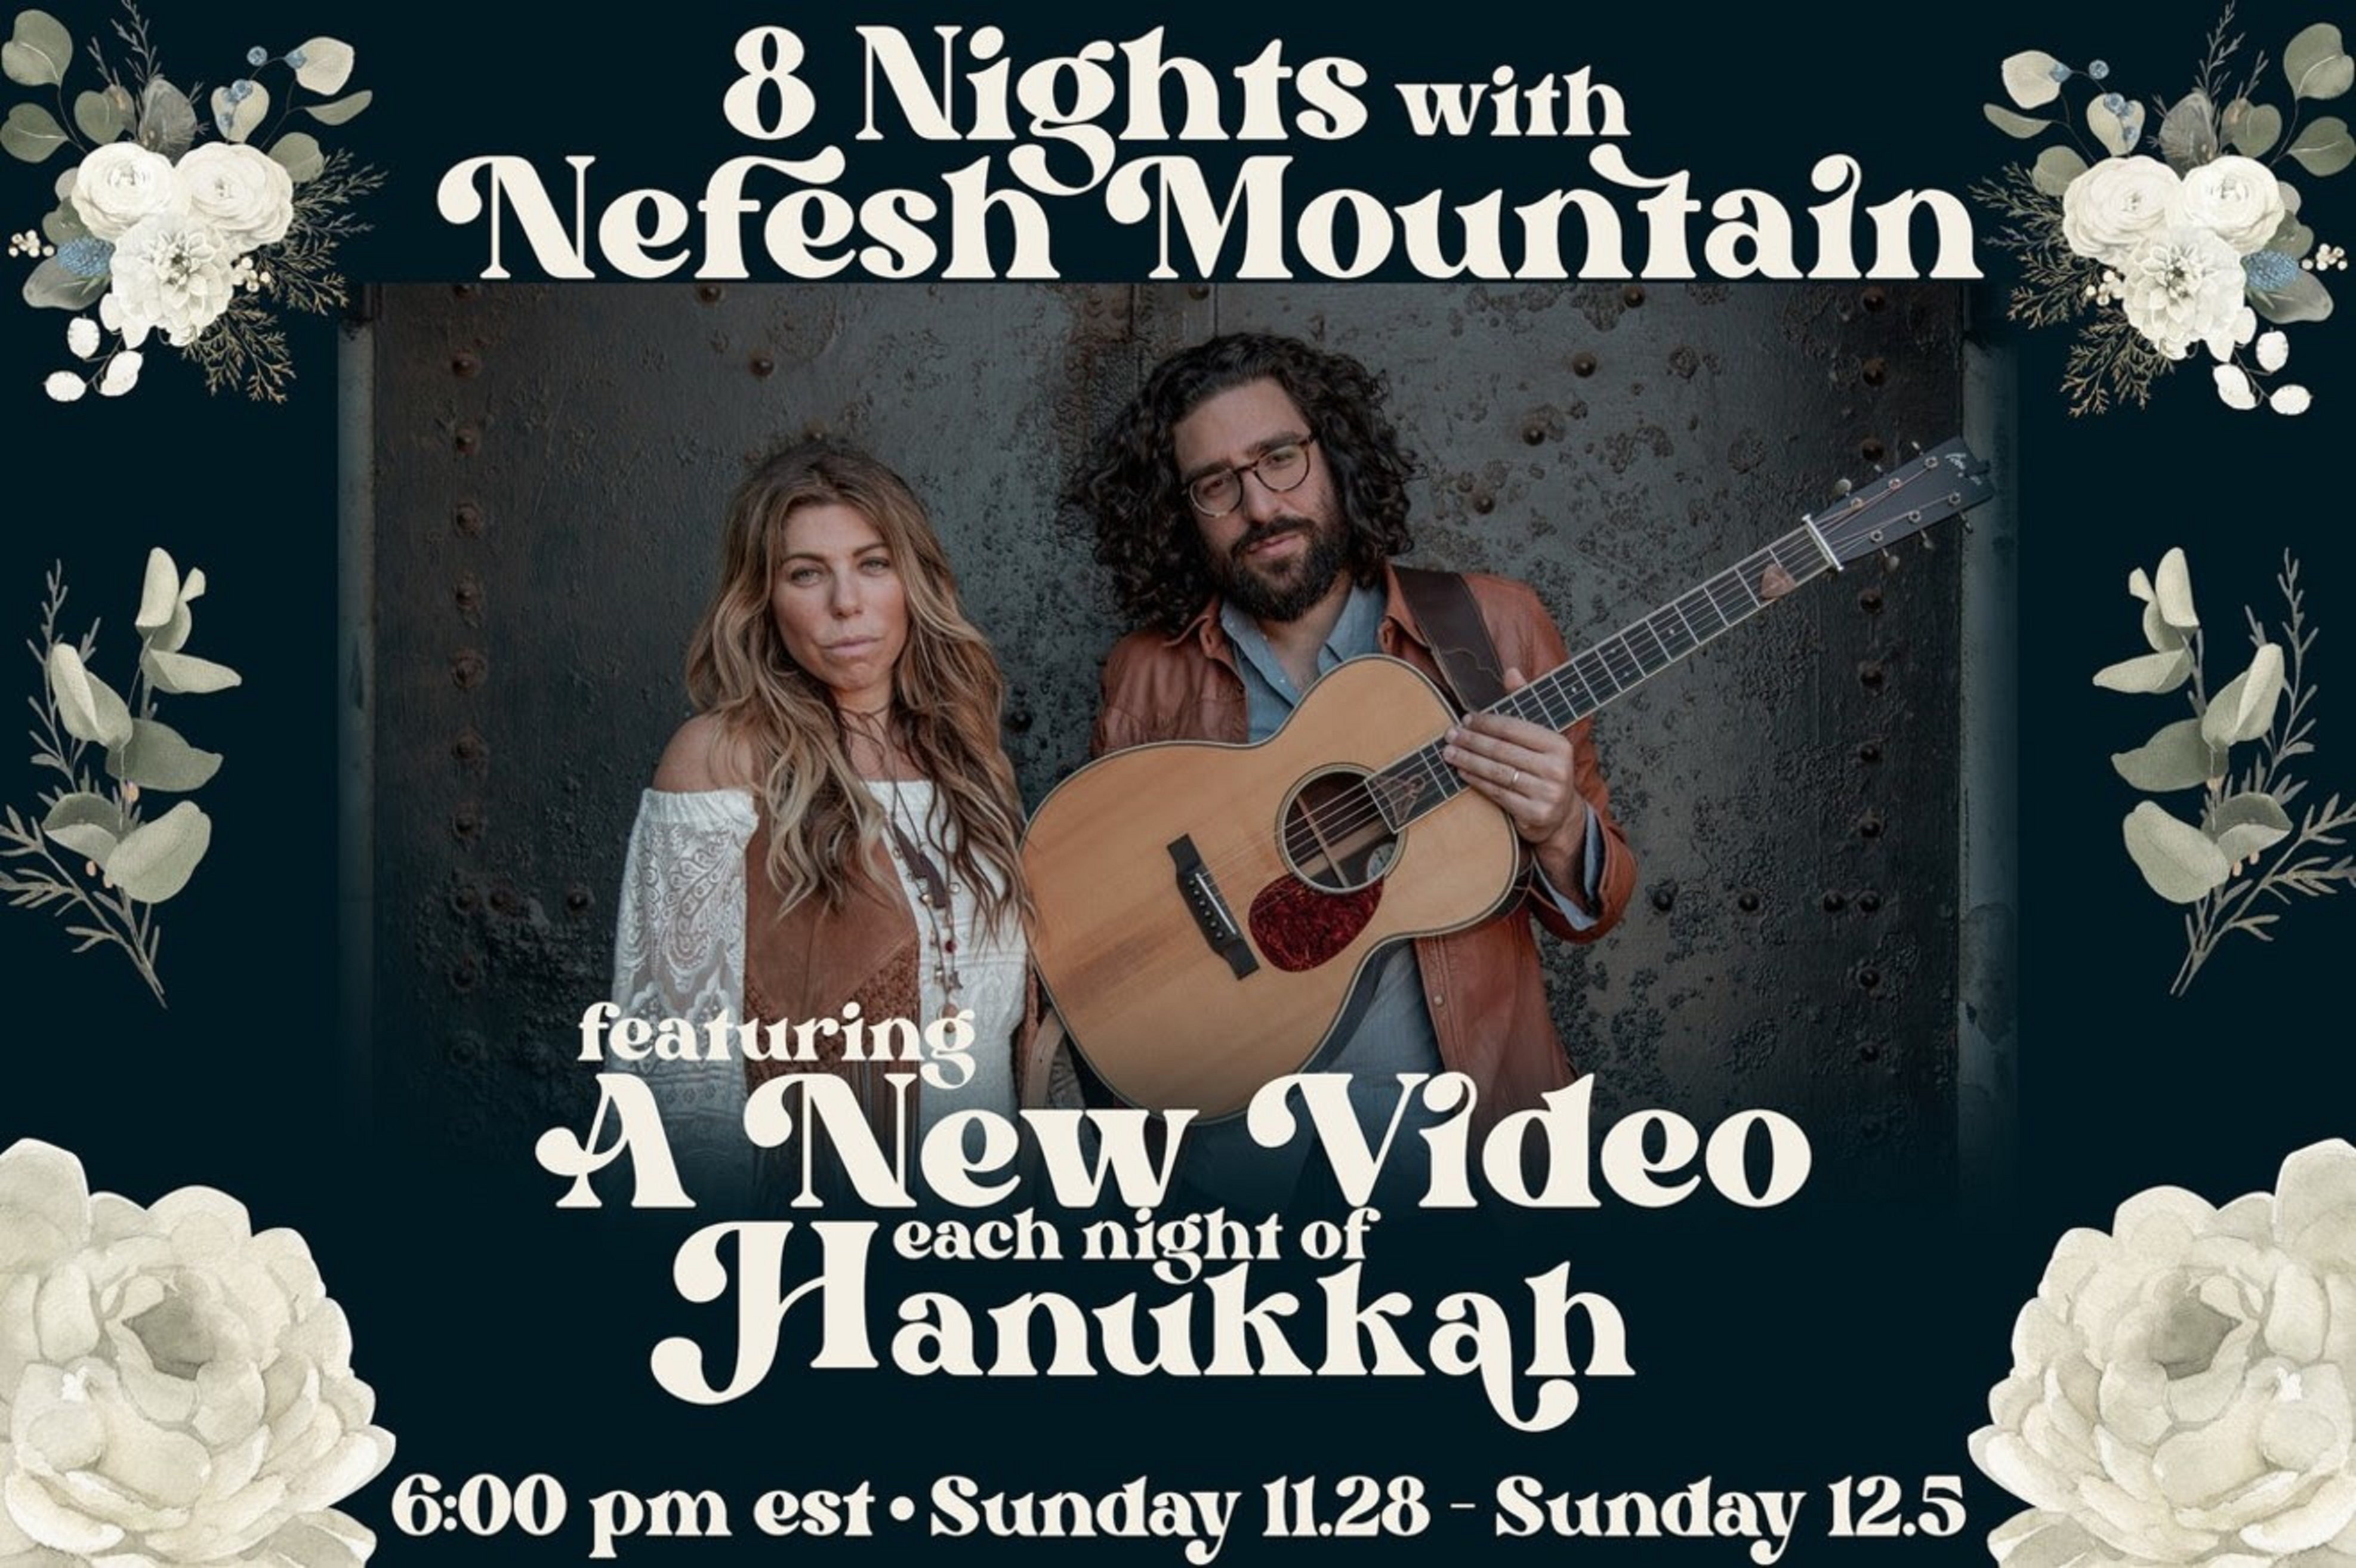 8 Nights of Hanukkah With Nefesh Mountain